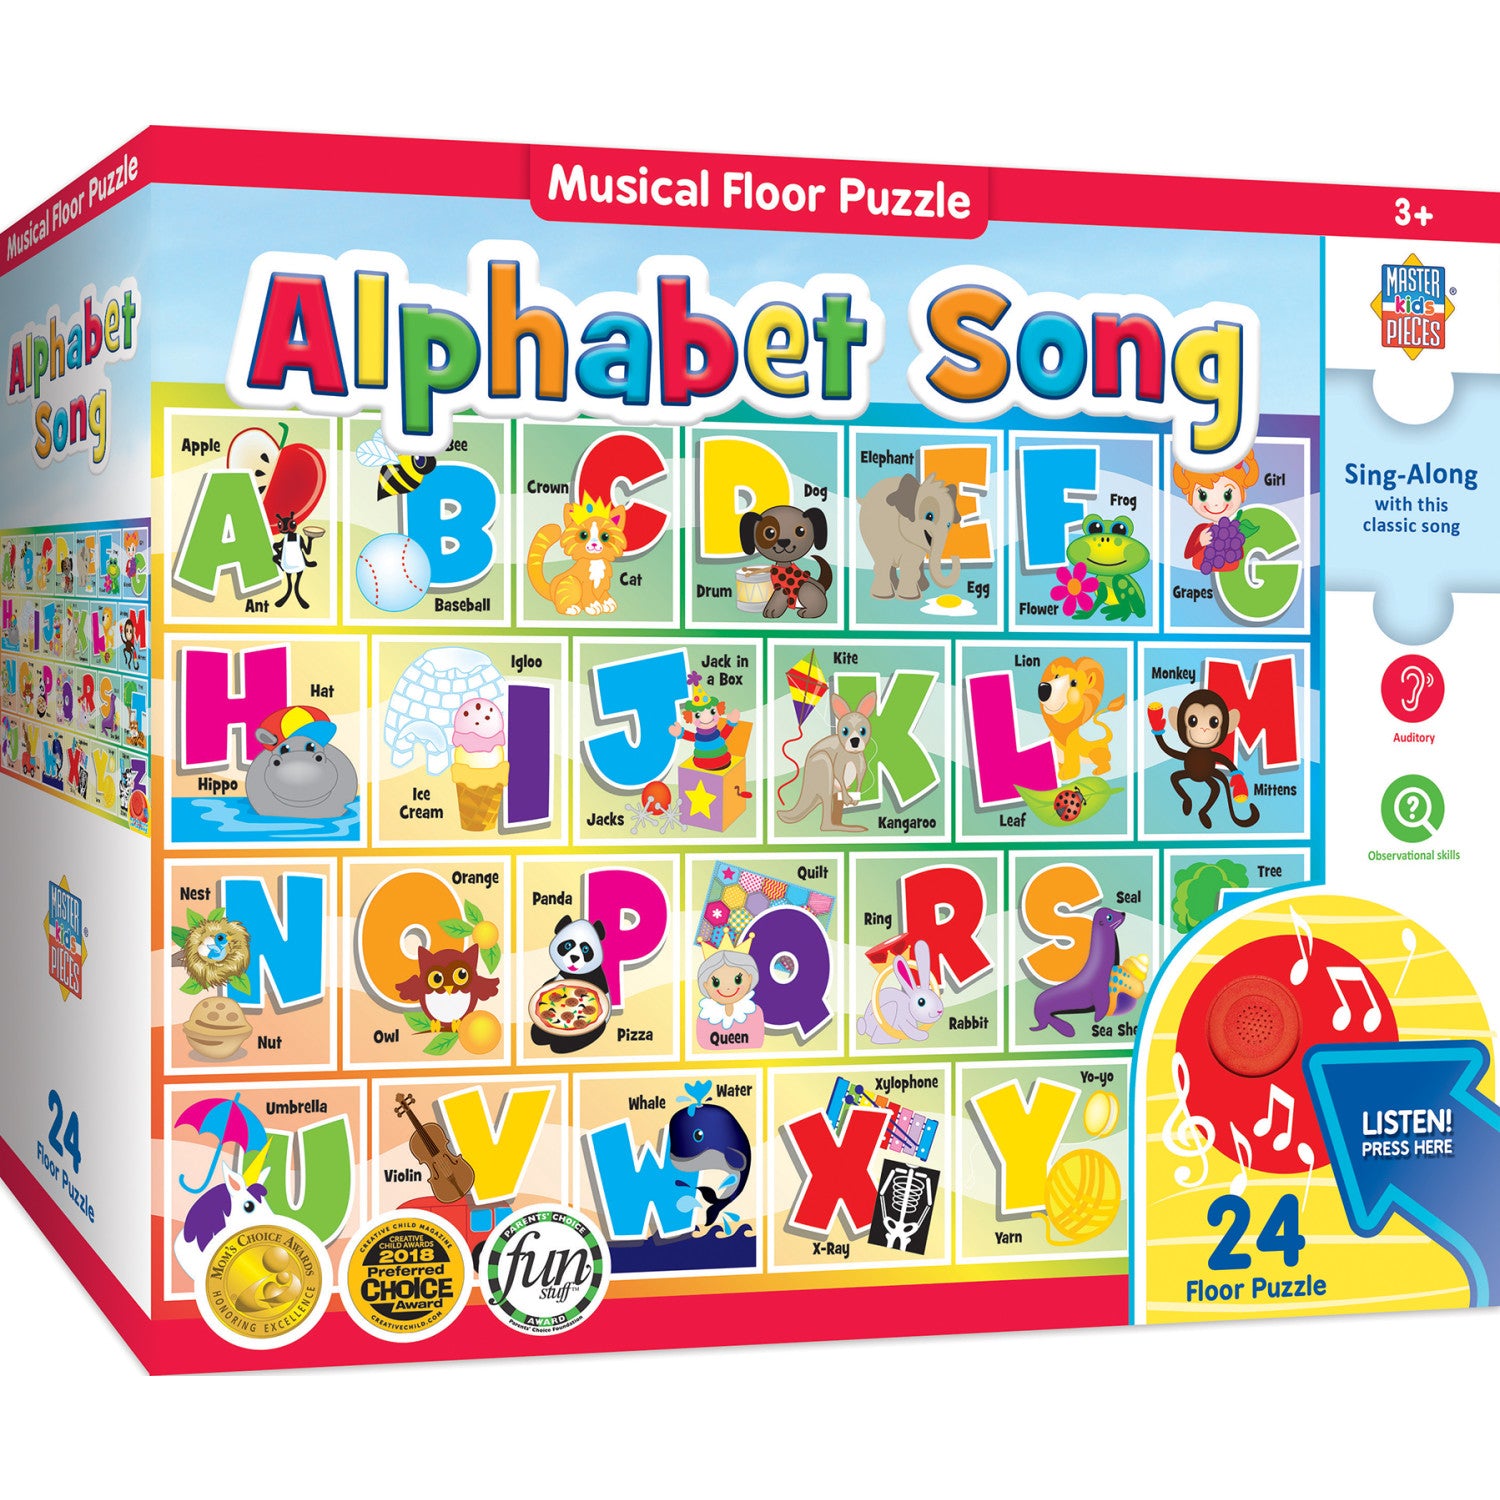 Alphabet Song - 24 Piece Musical Floor Jigsaw Puzzle